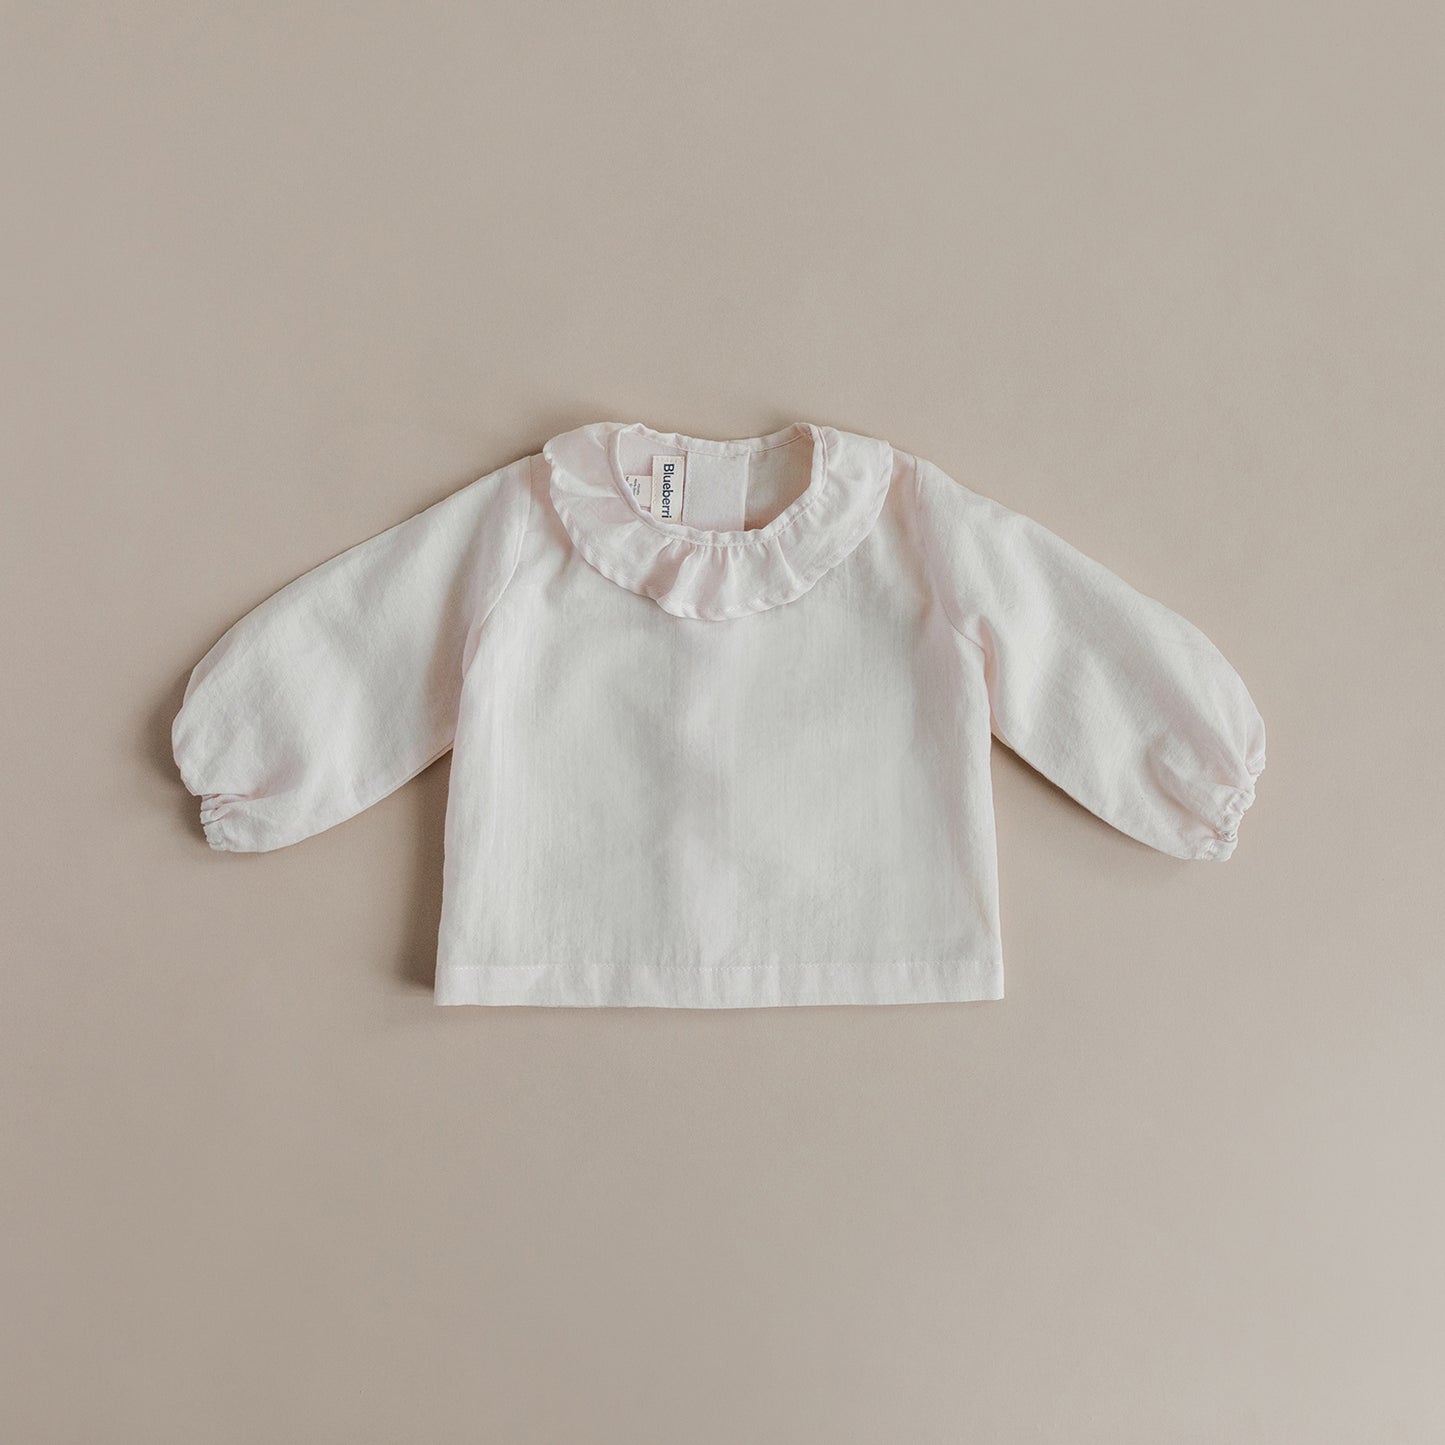 Classic Ruffle Shirt for Babies & Kids - Pastel Pink